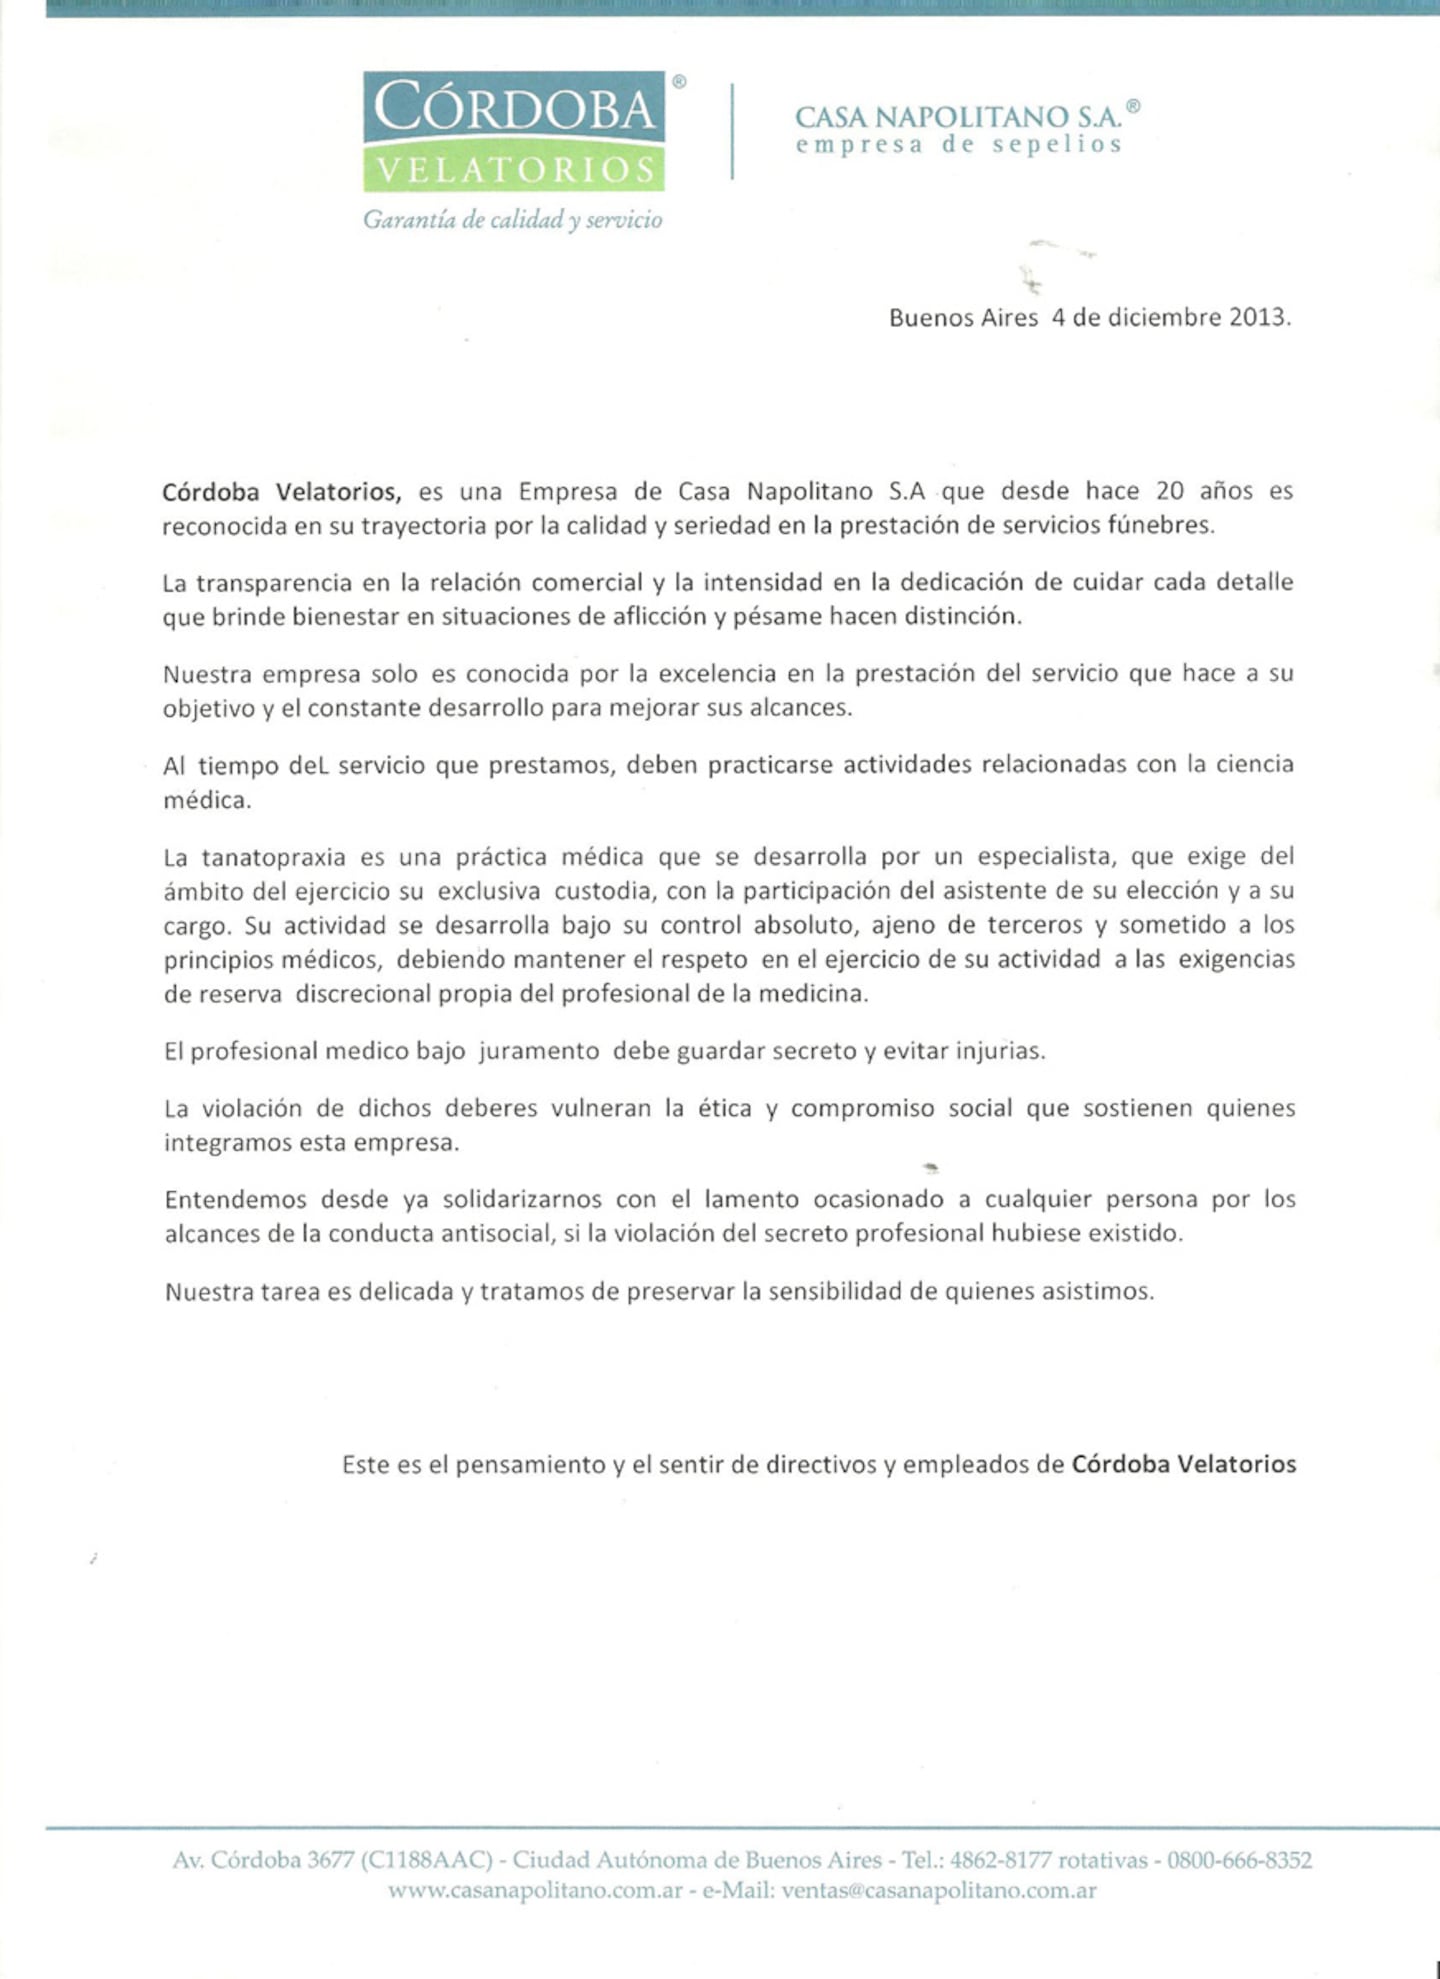 El comunicado de Córdoba Velatorios.